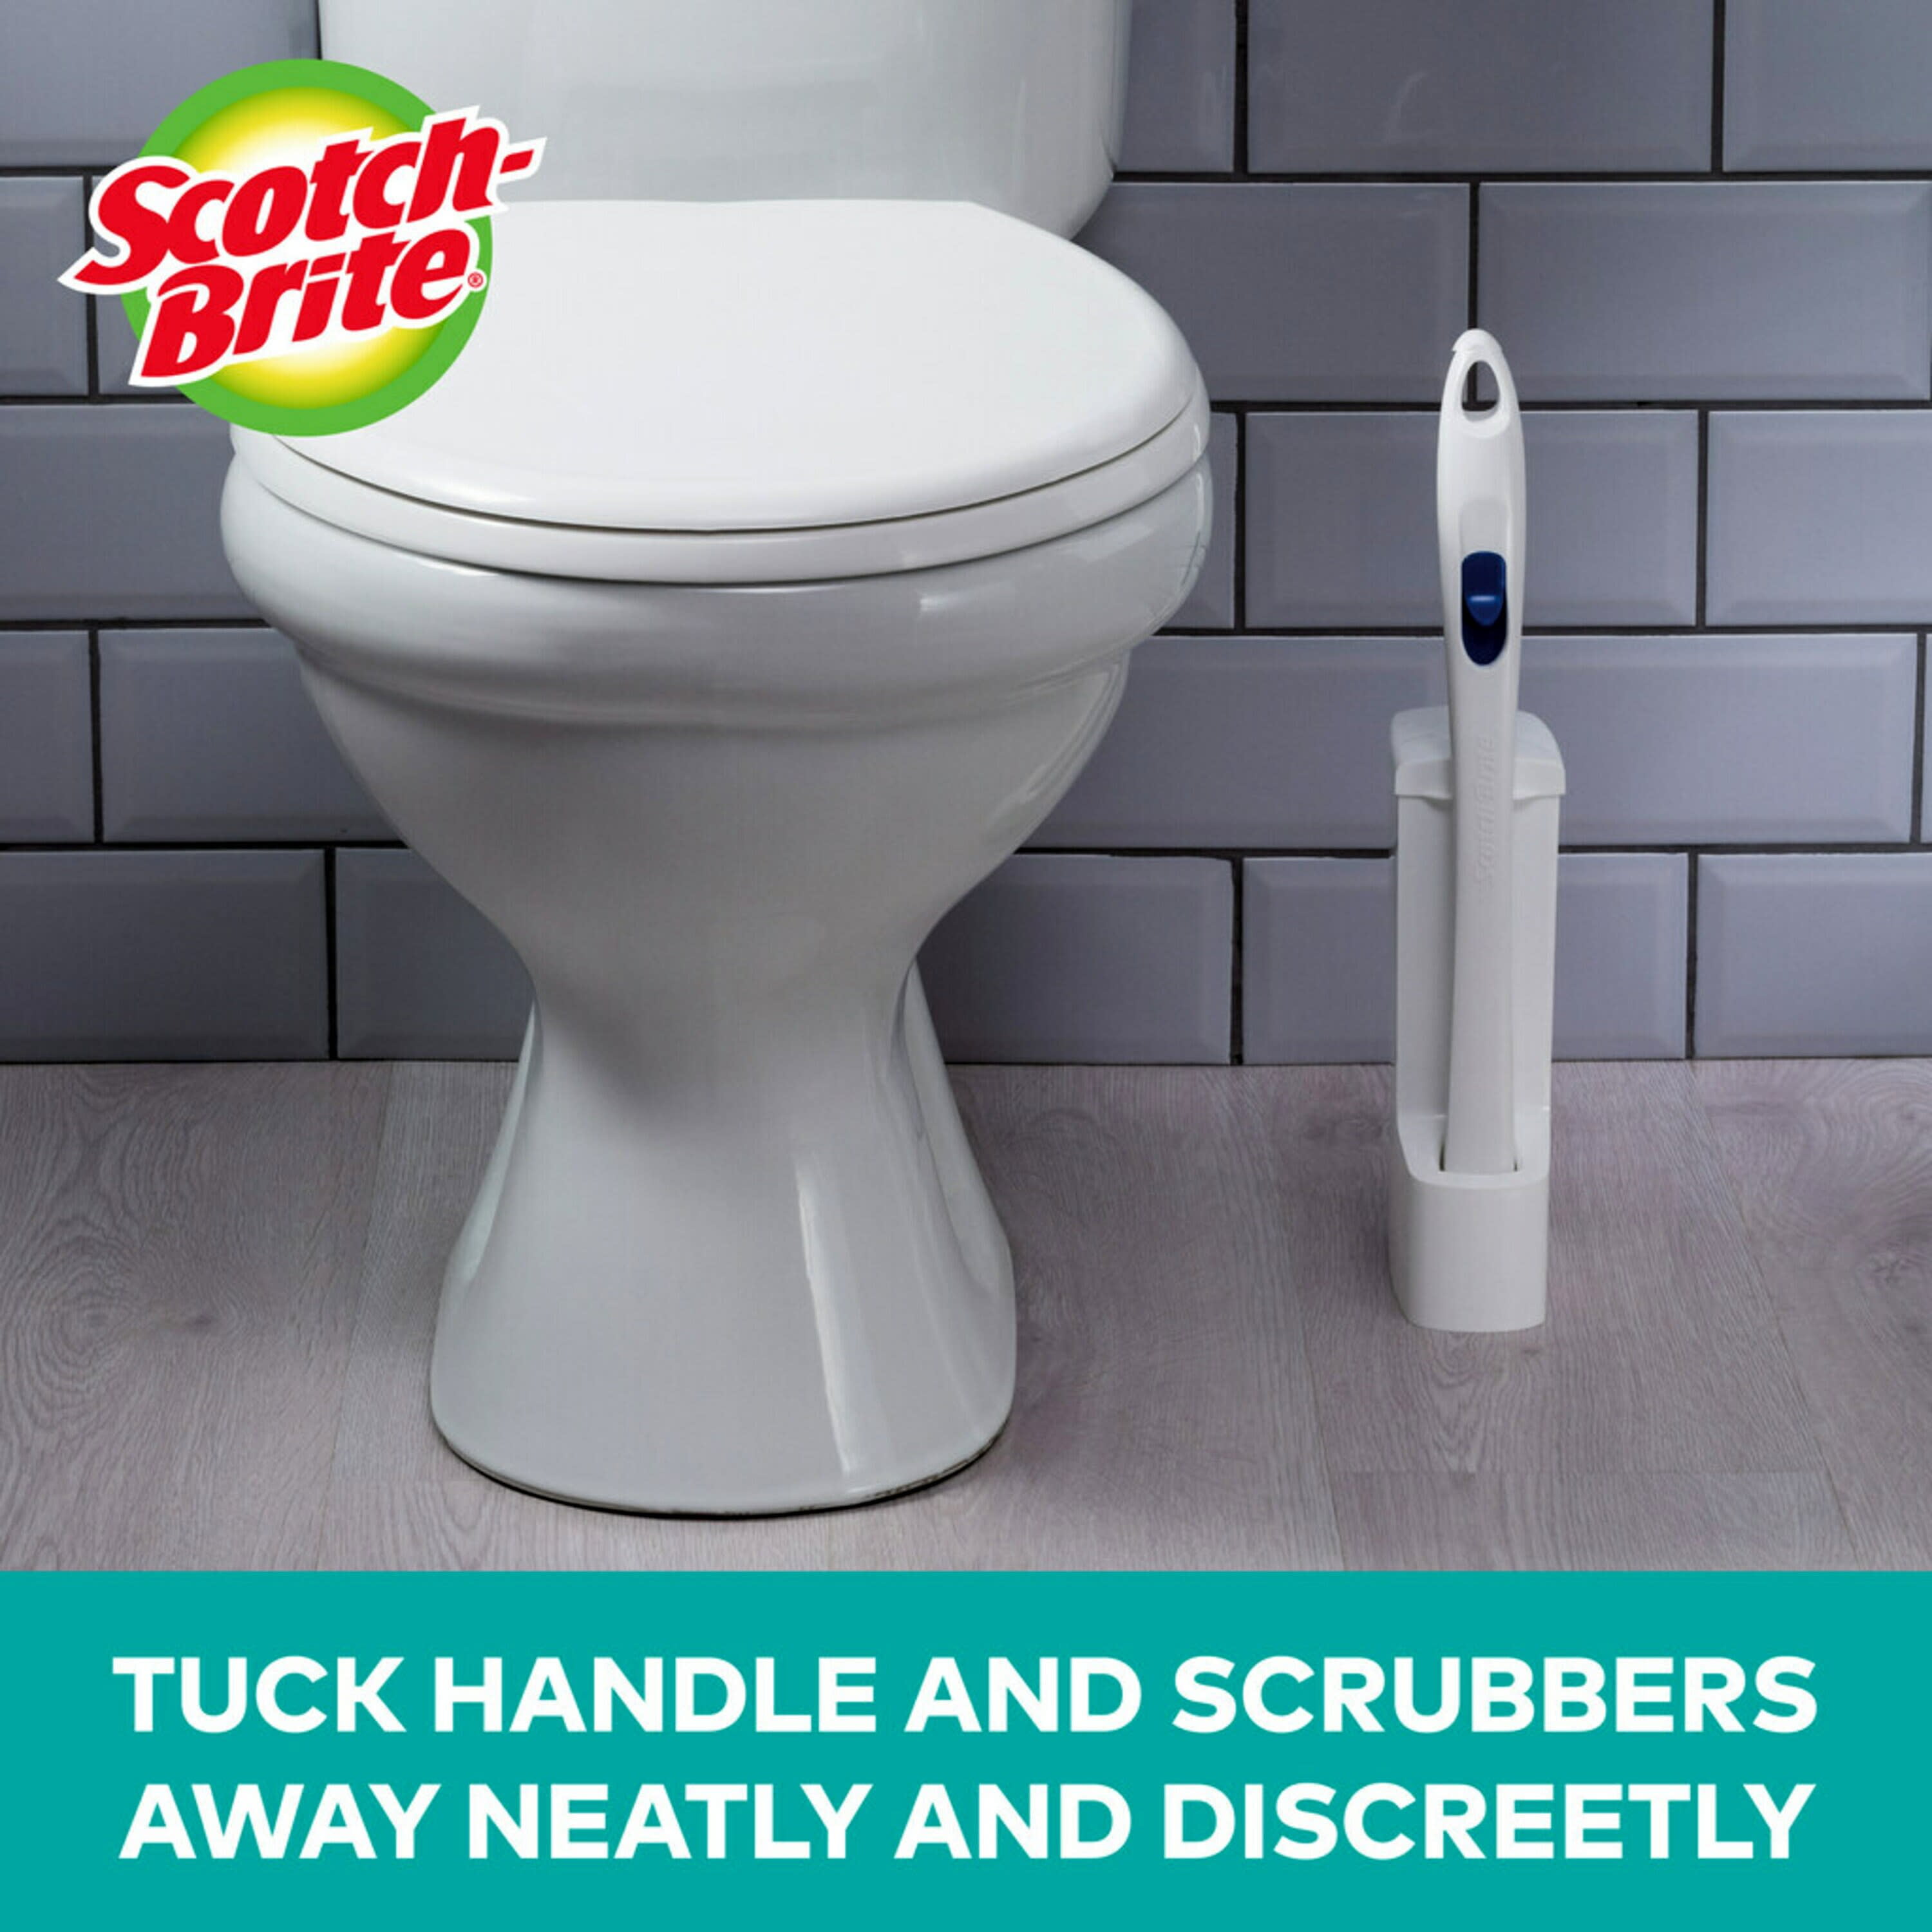 Scotch-brite Scrub & Drop Dissolvable Toilet Bowl Cleaning System